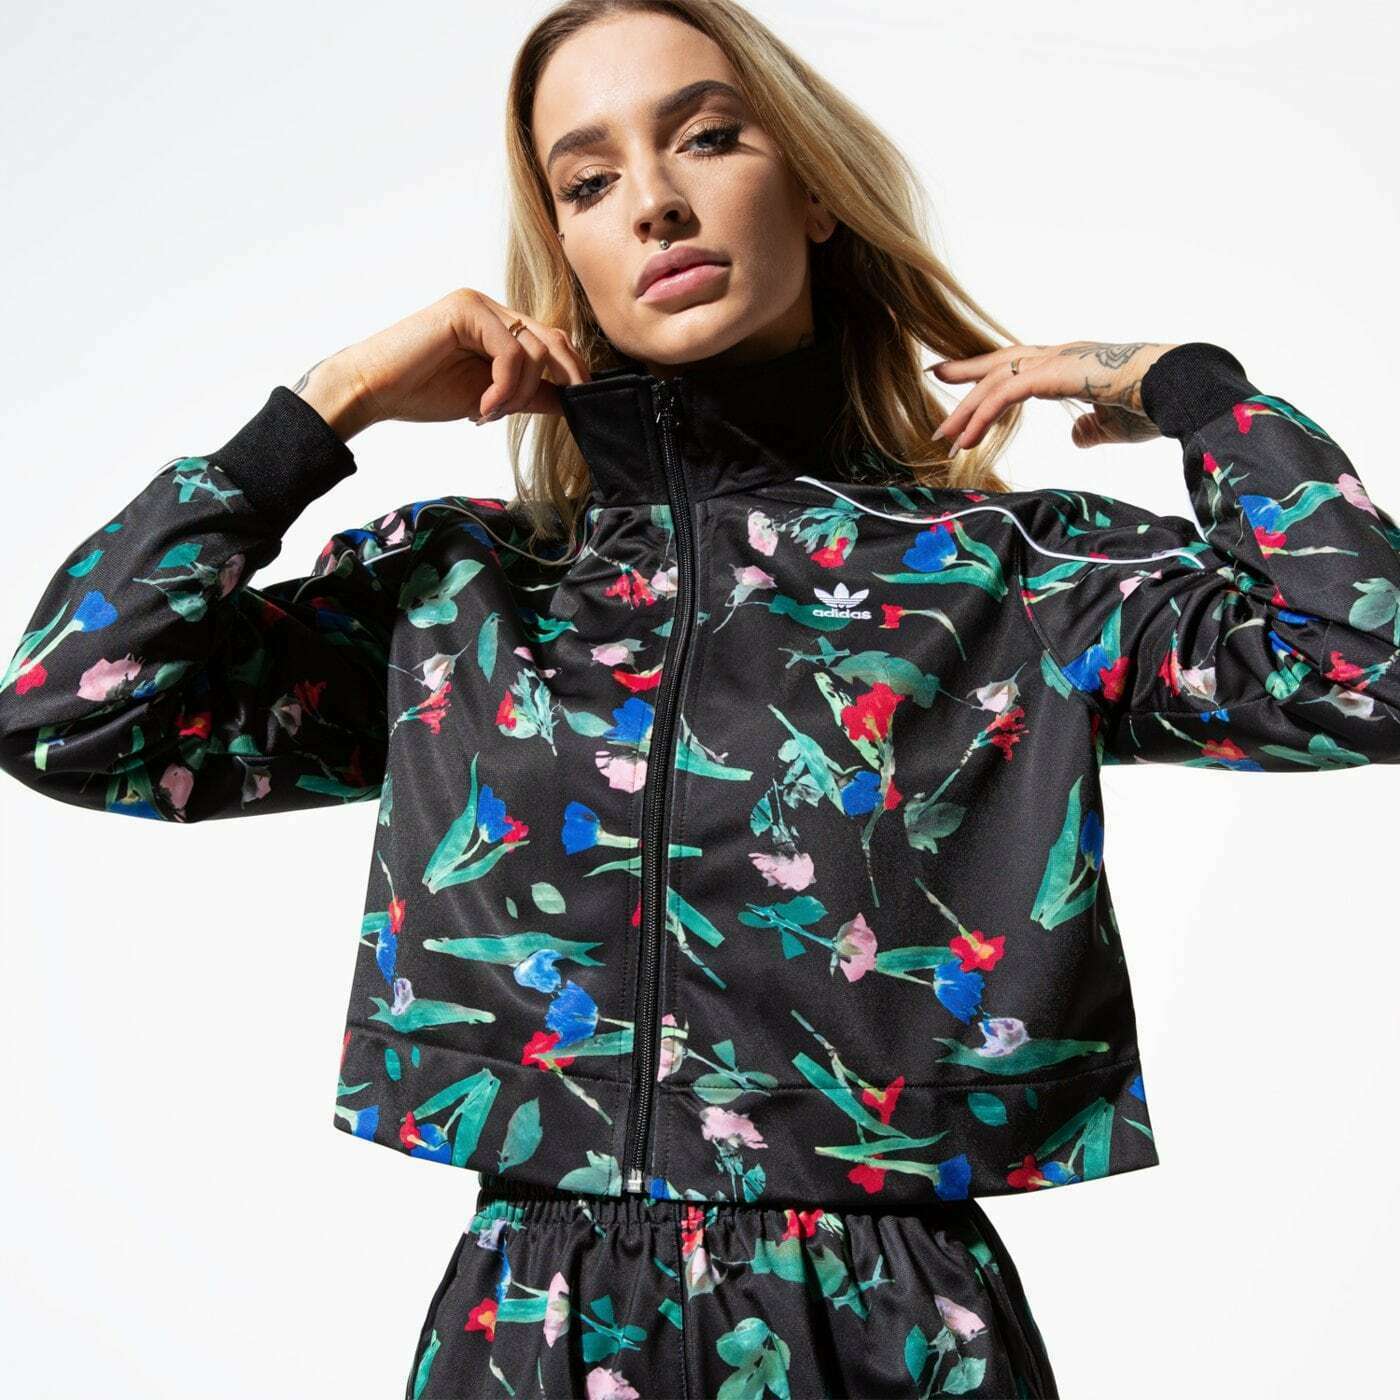 Women's Adidas Originals 'Bellista All Over Print' Floral AOP Track Top  (EC5772) | eBay